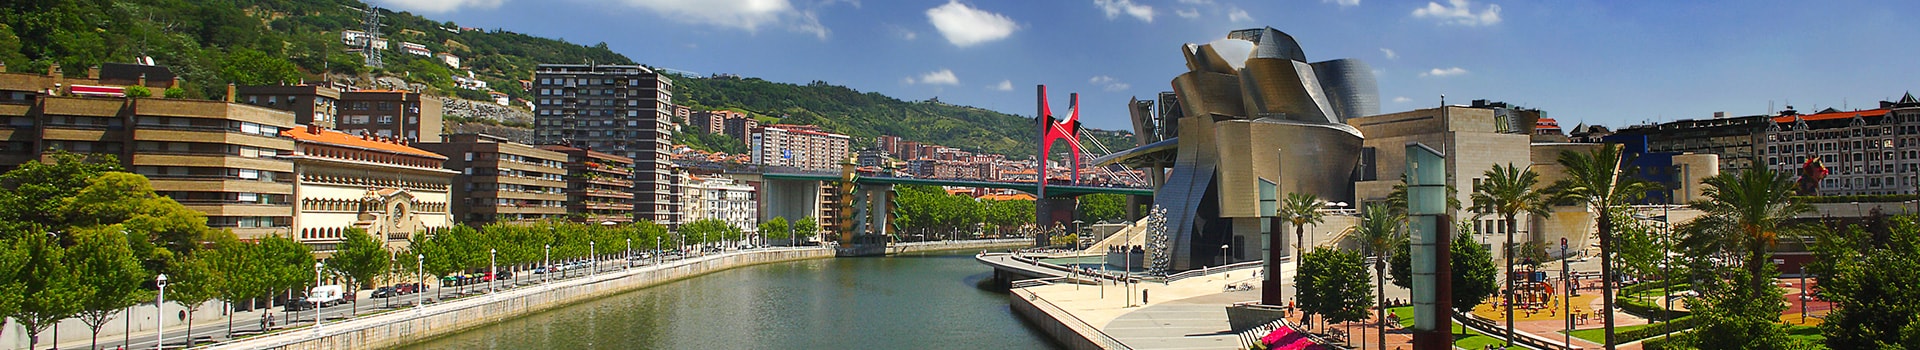 Barcelona - Bilbao